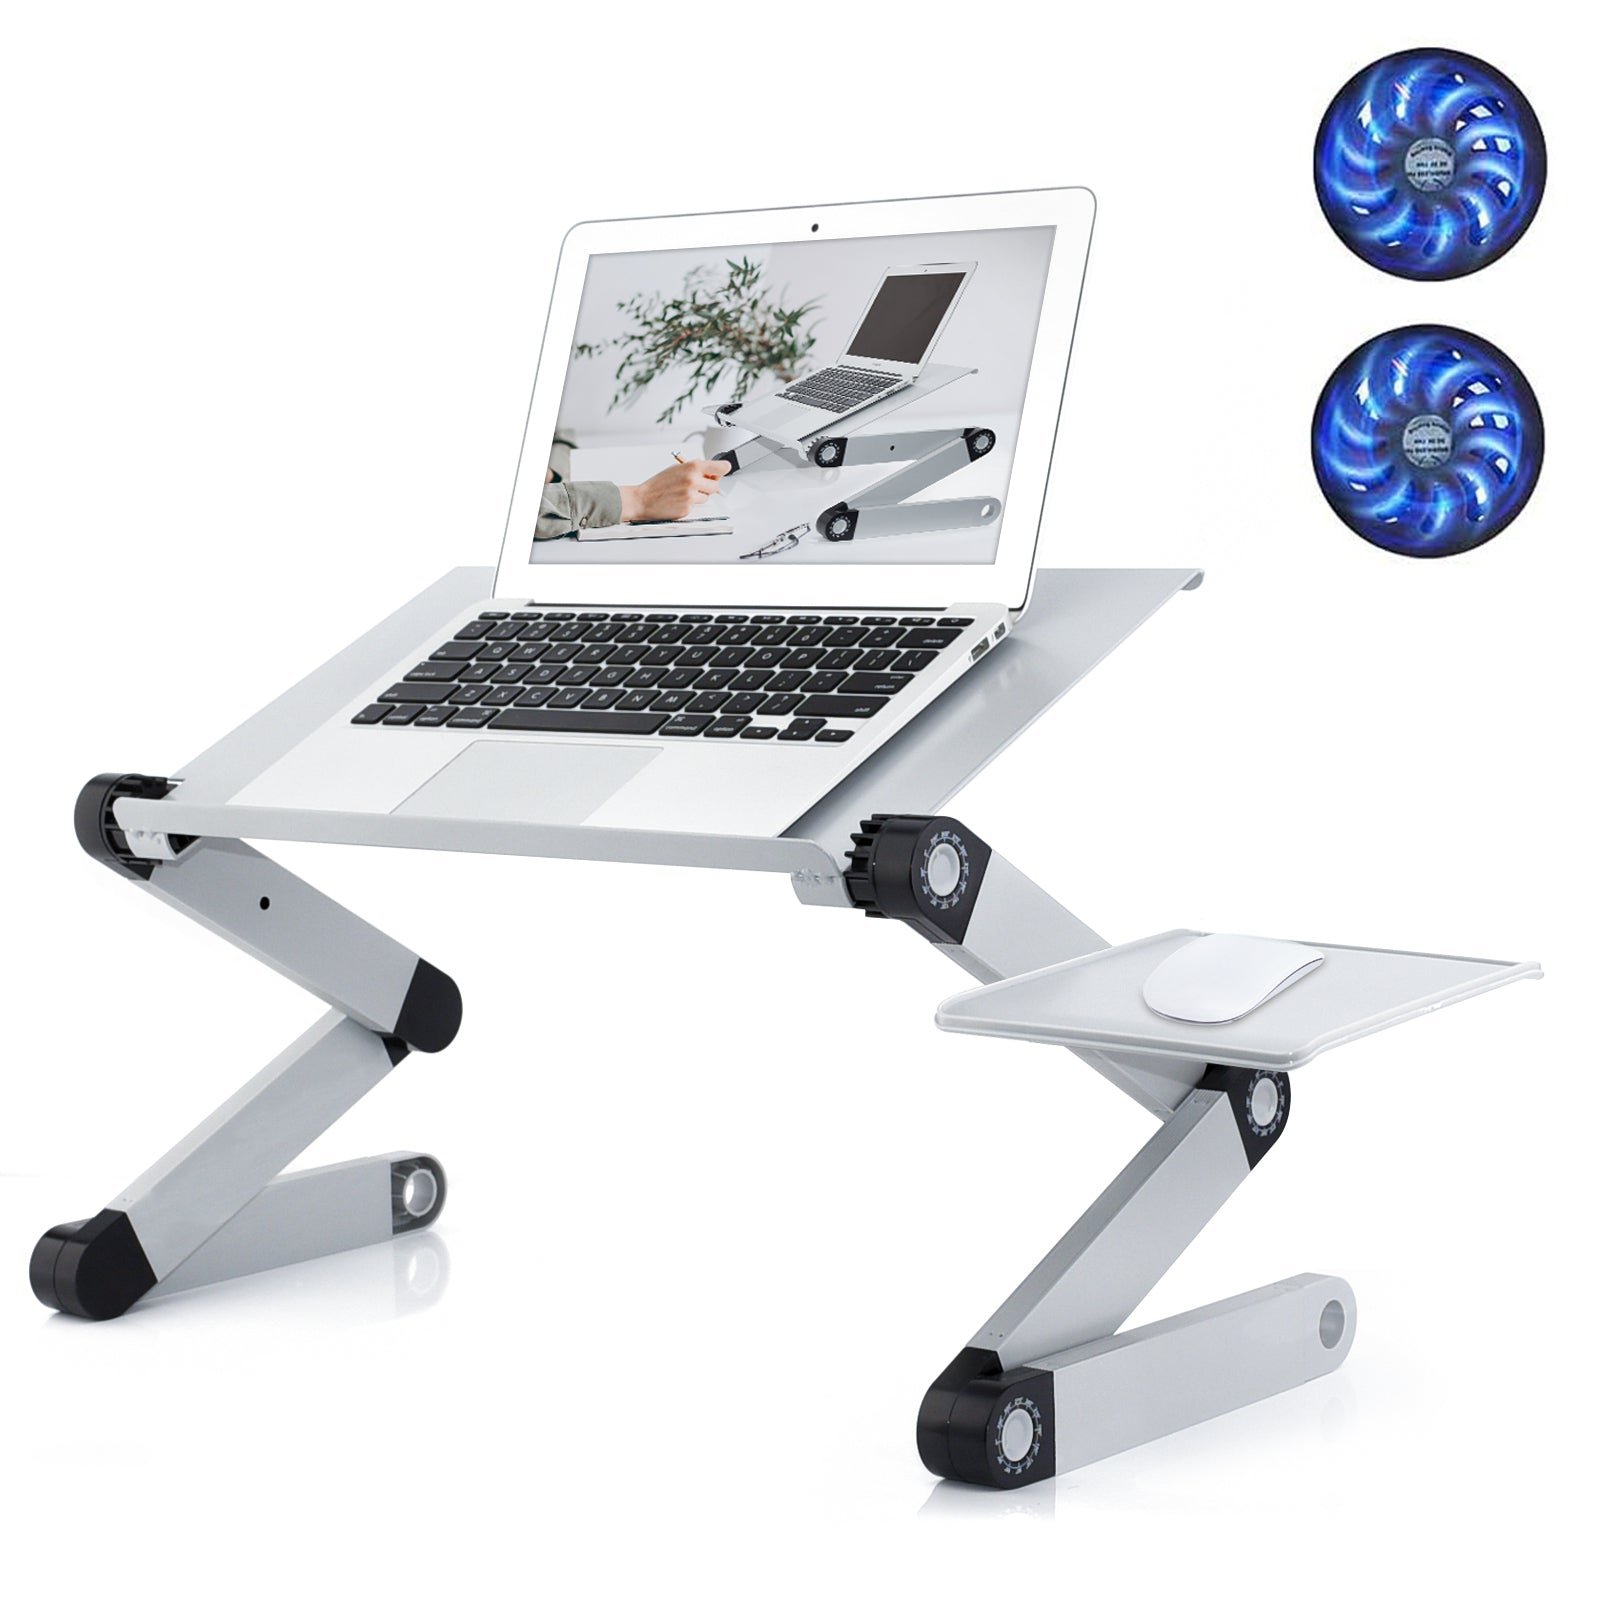 RainBean Laptop Desk Showcasing Dual Fans